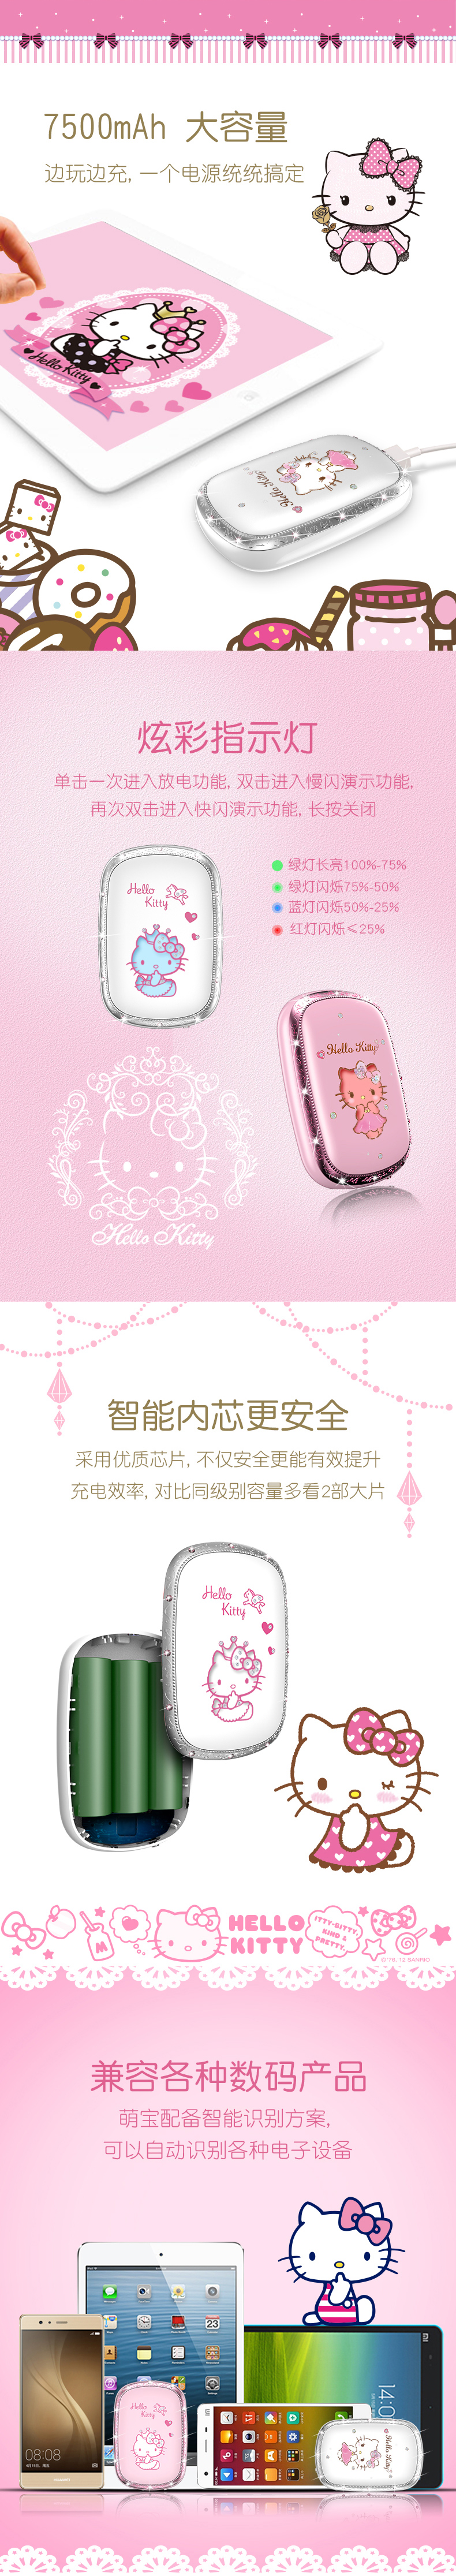 Hello Kitty 移动电源7800mAh 炫彩系列-宝石凯蒂